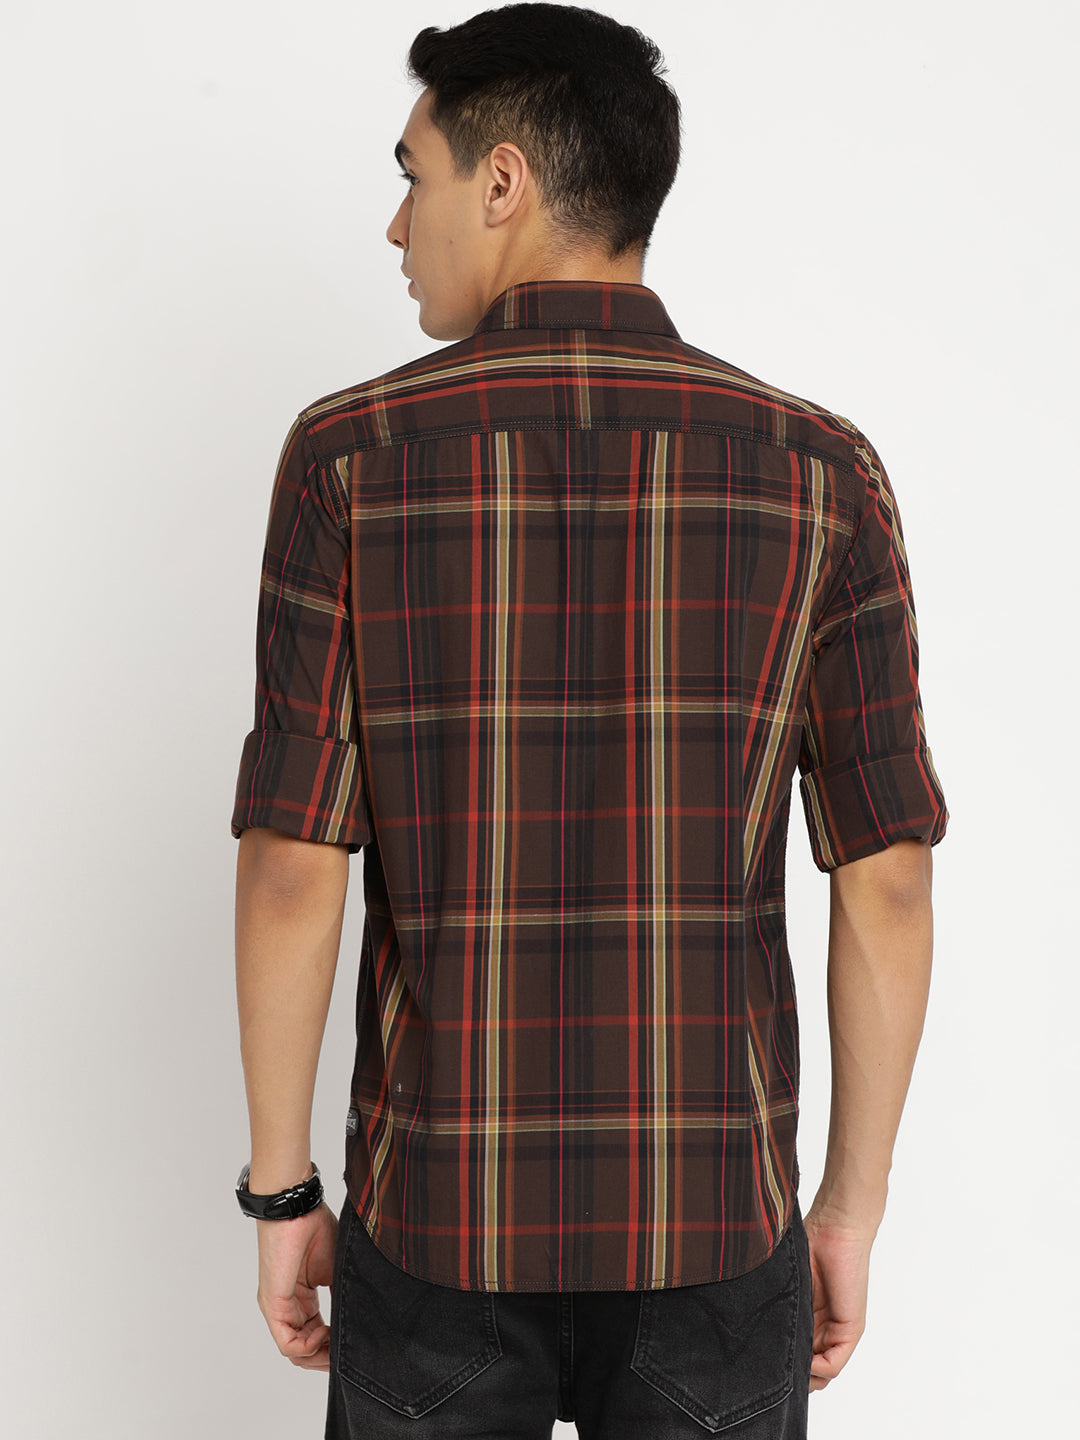 Dark Brown Checkerd Shirt